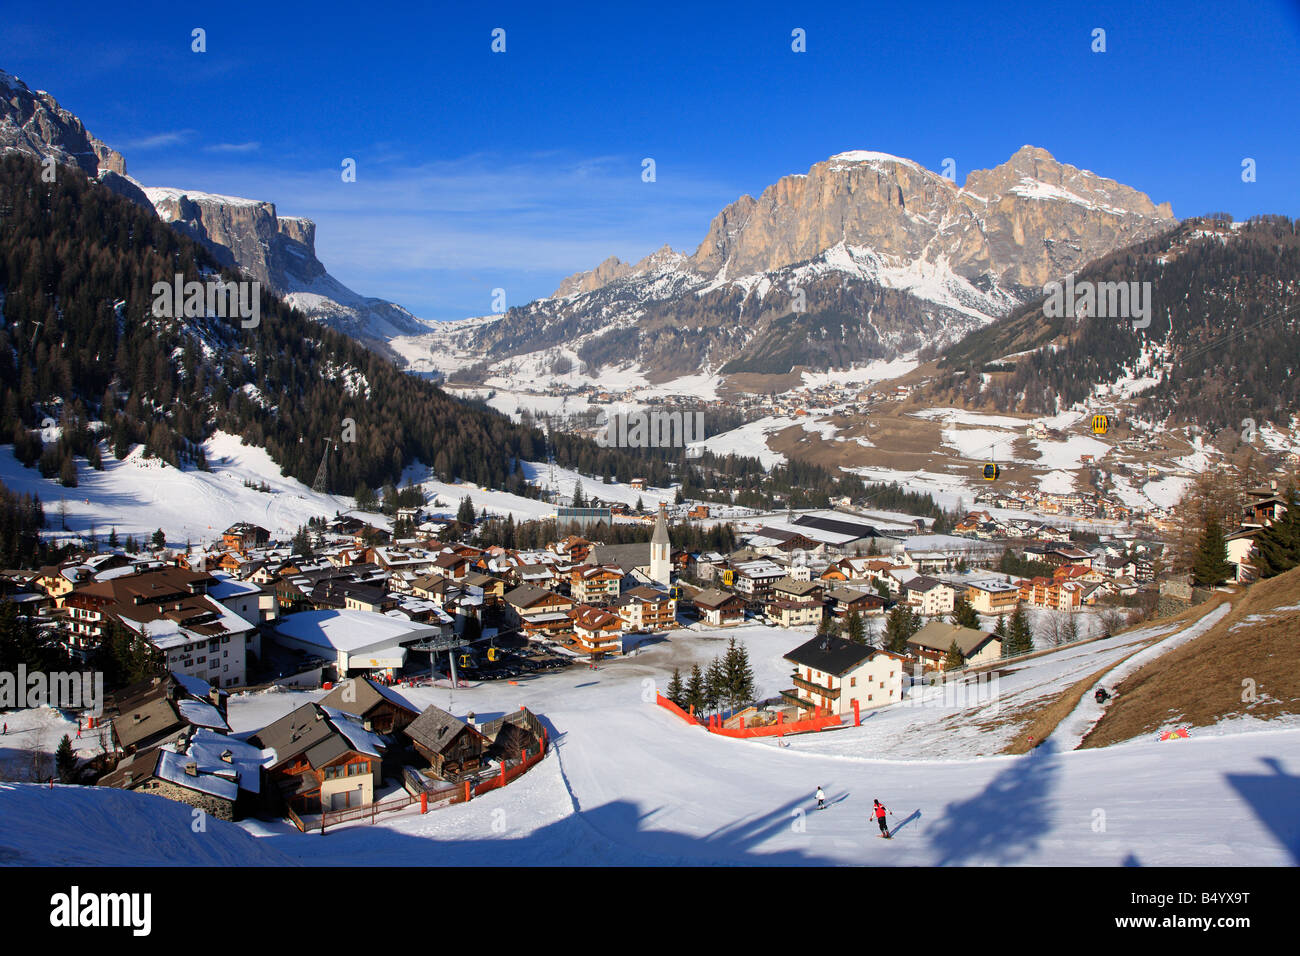 Village of Corvara in winter snow, Dolomites, Italy Stock Photo